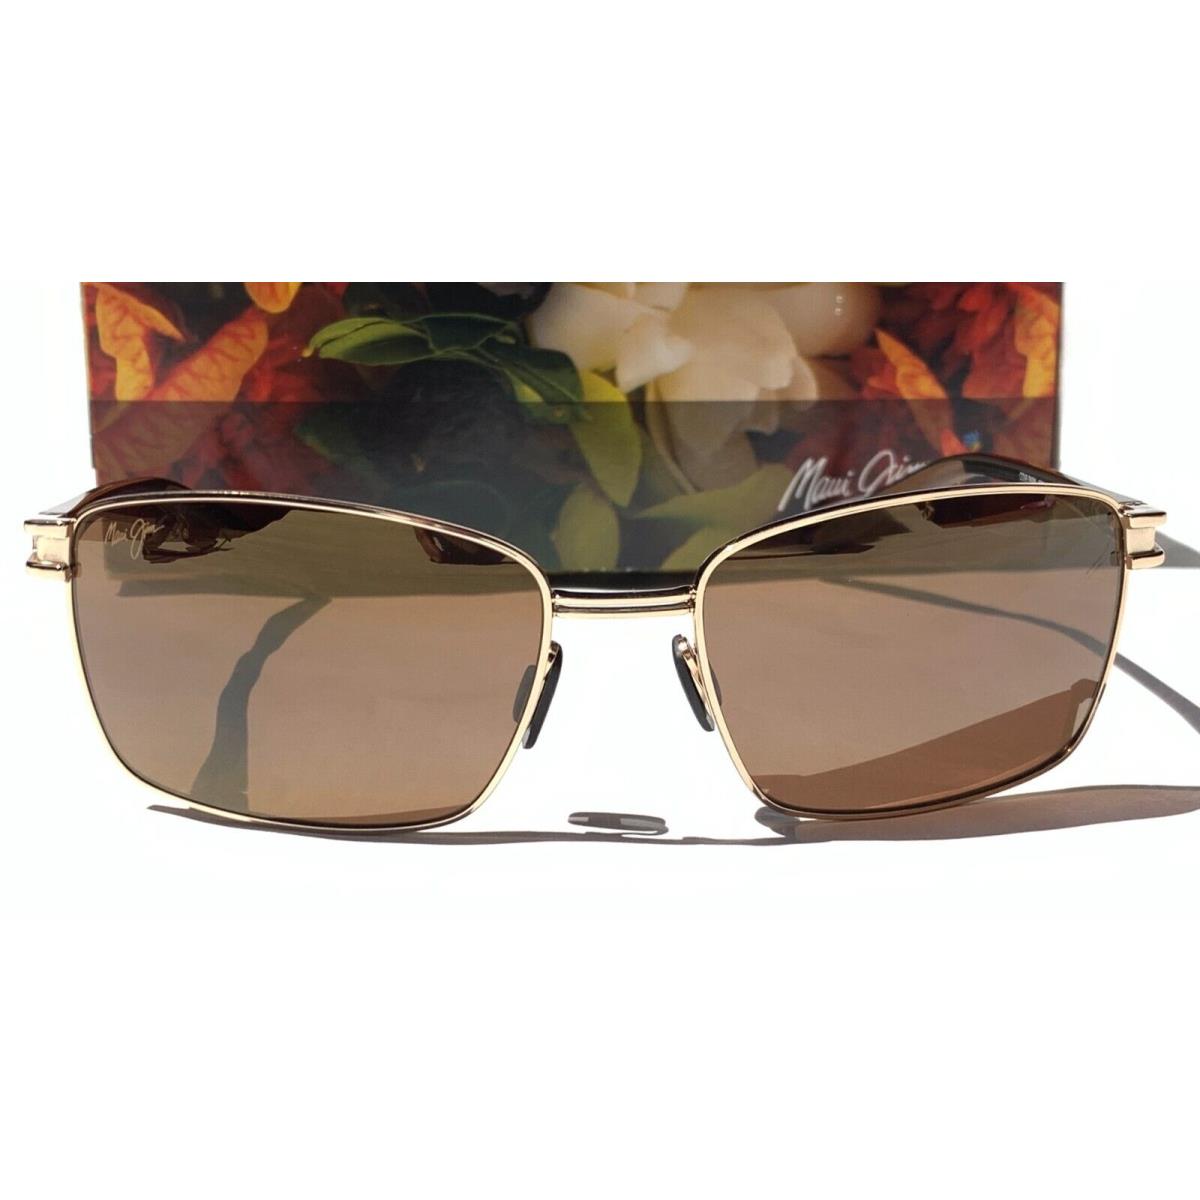 Maui Jim Cove Park Gold Black Sunglasses Polarized Brown Glass Lens H531-16